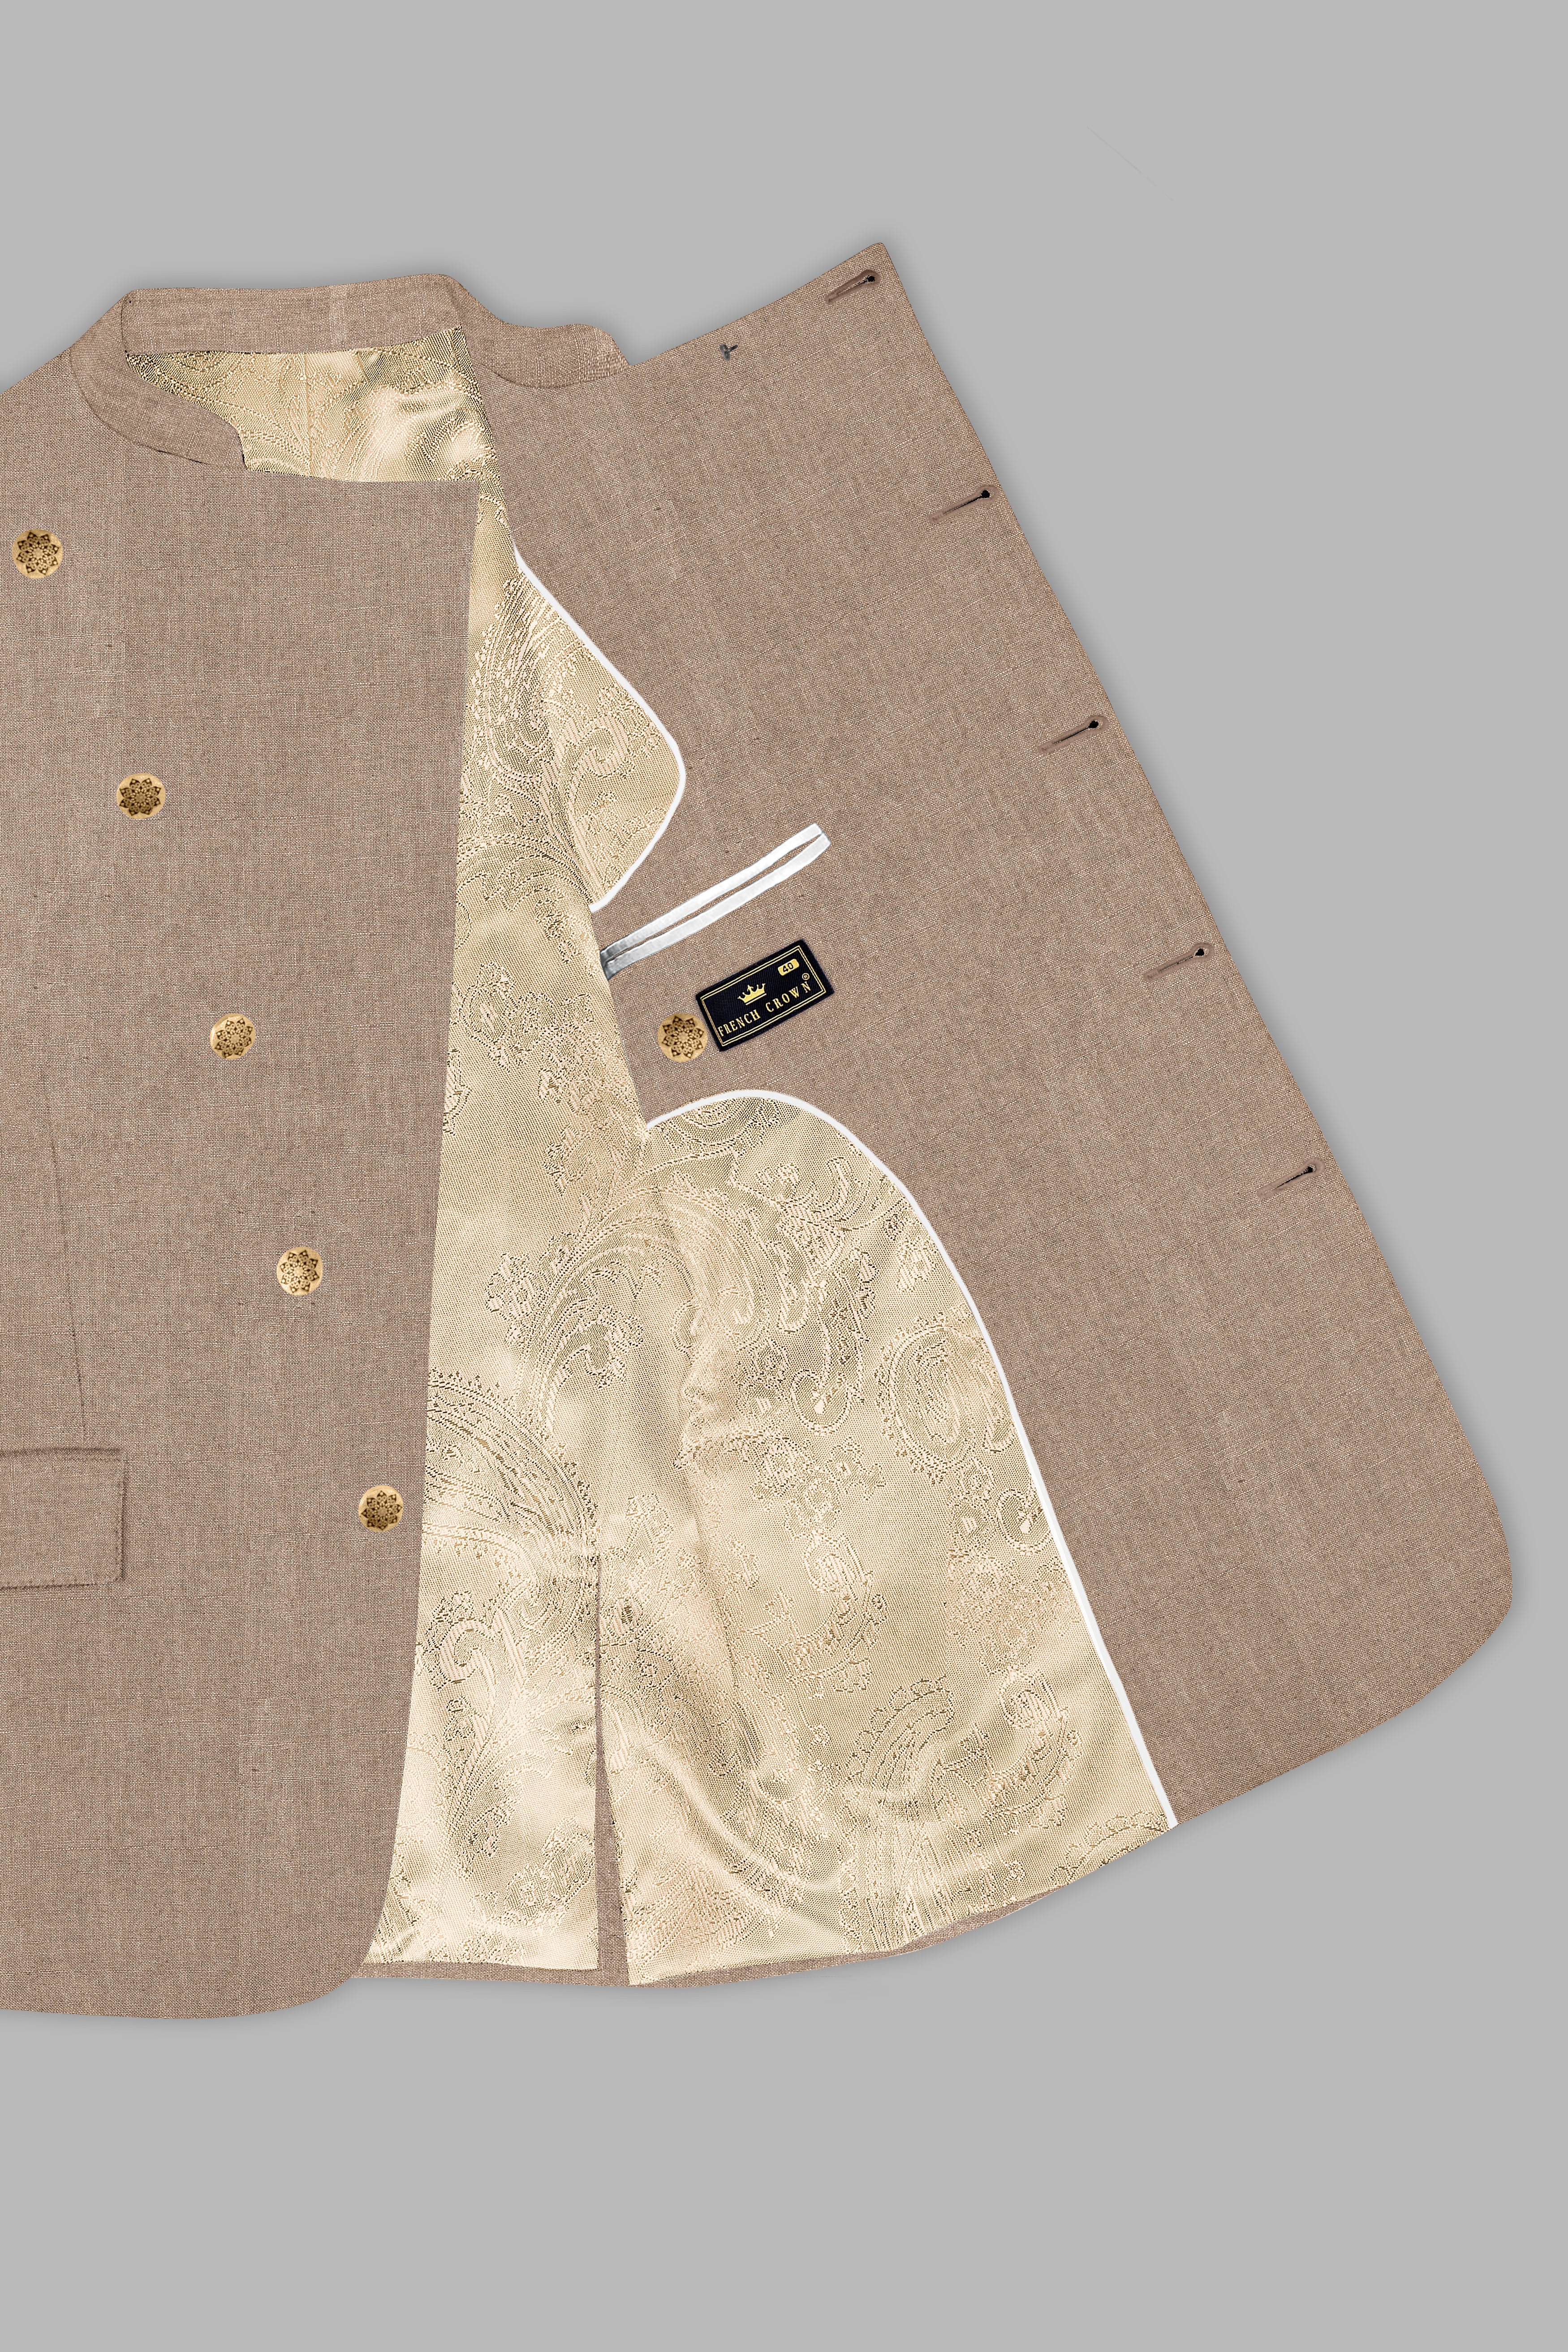 Beaver Brown Cross Placket Bandhgala Luxurious Linen Blazer